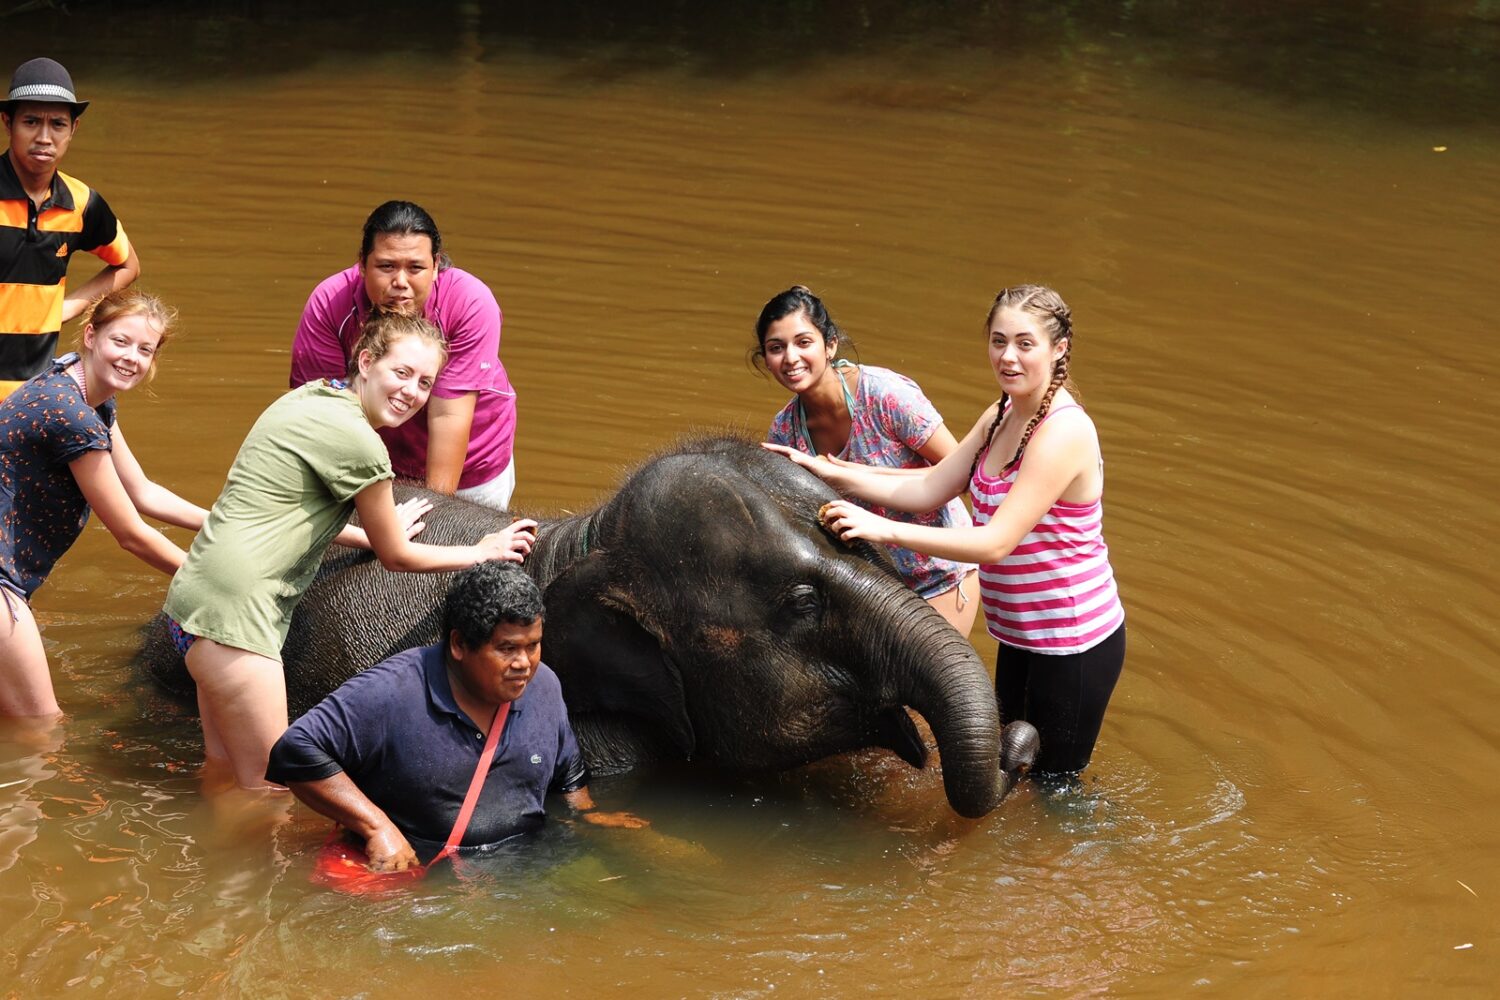 elephant tour malaysia